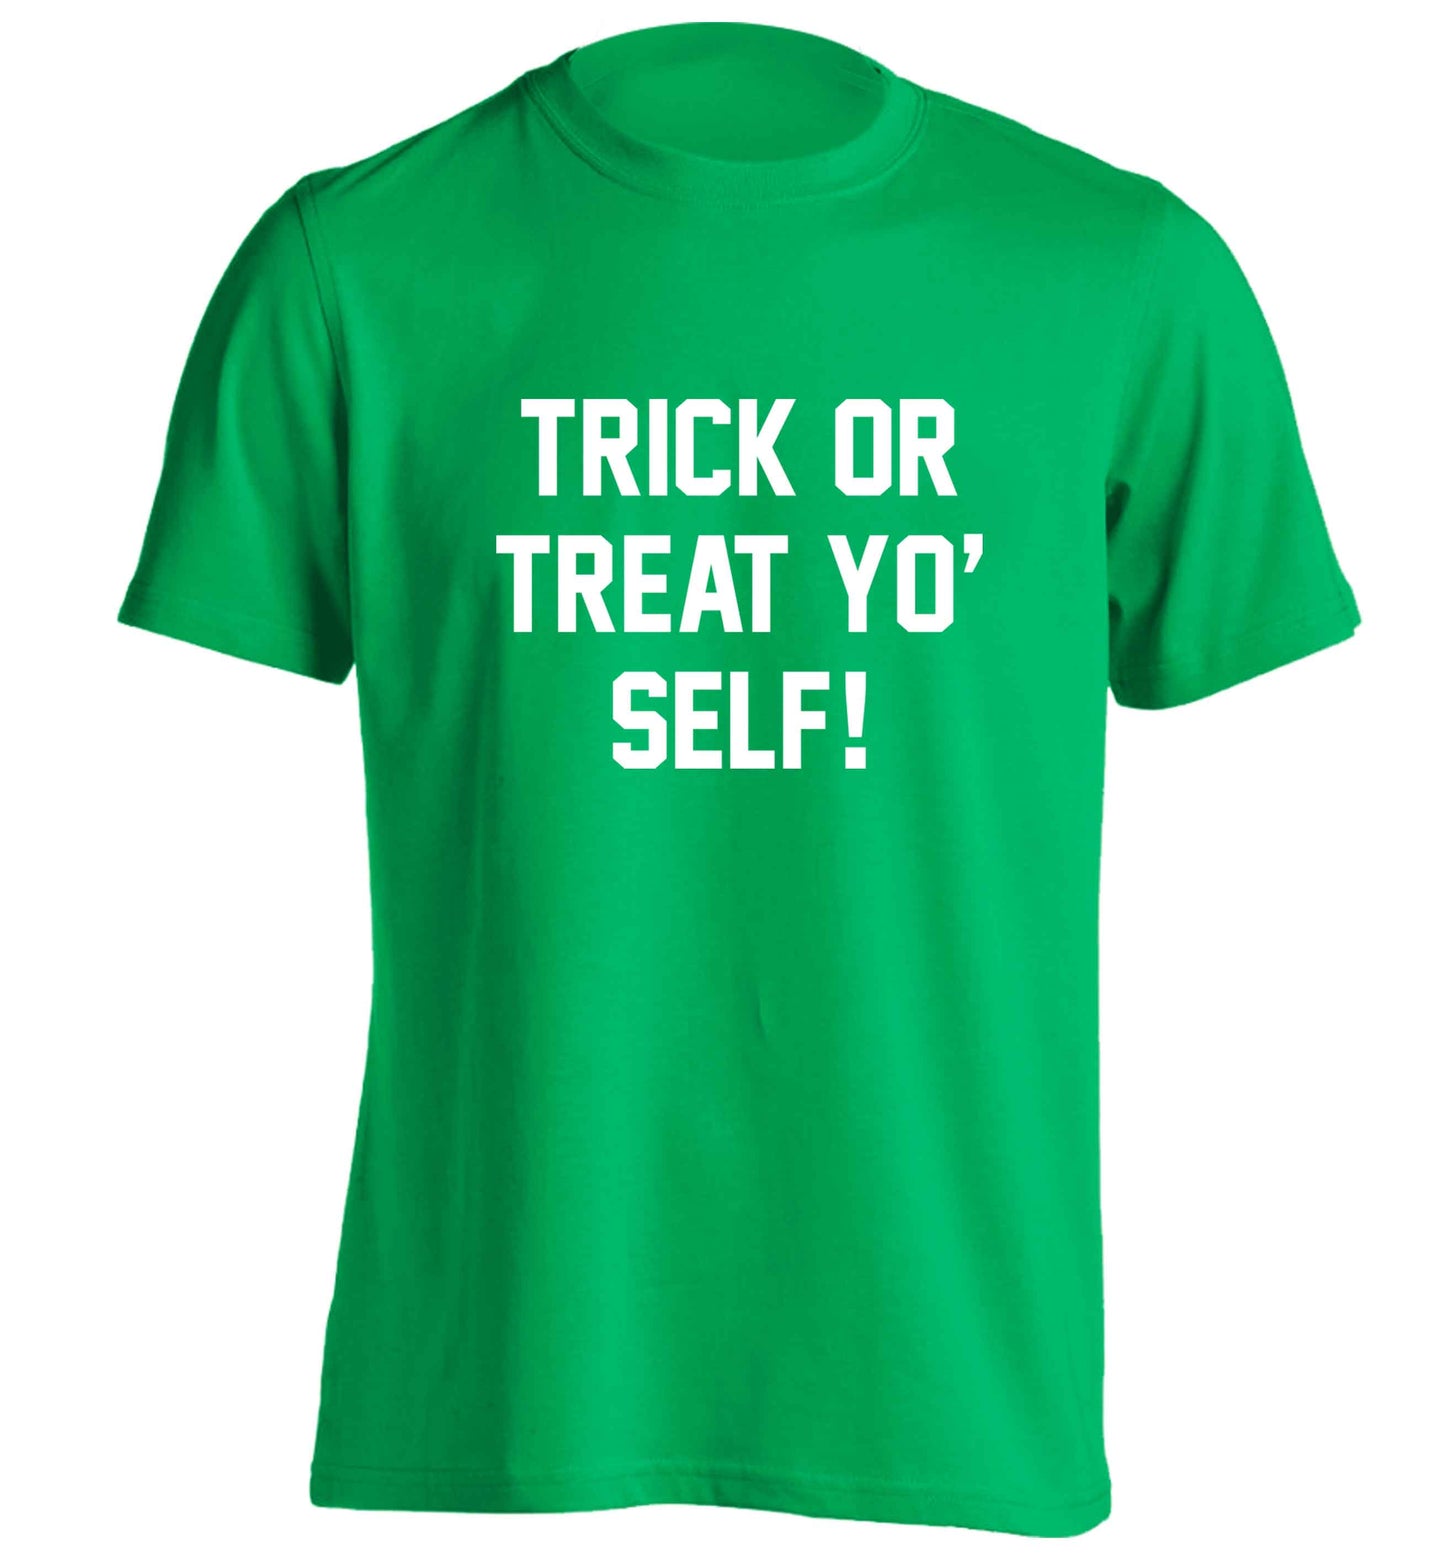 Trick or Treat Yo' Self adults unisex green Tshirt 2XL